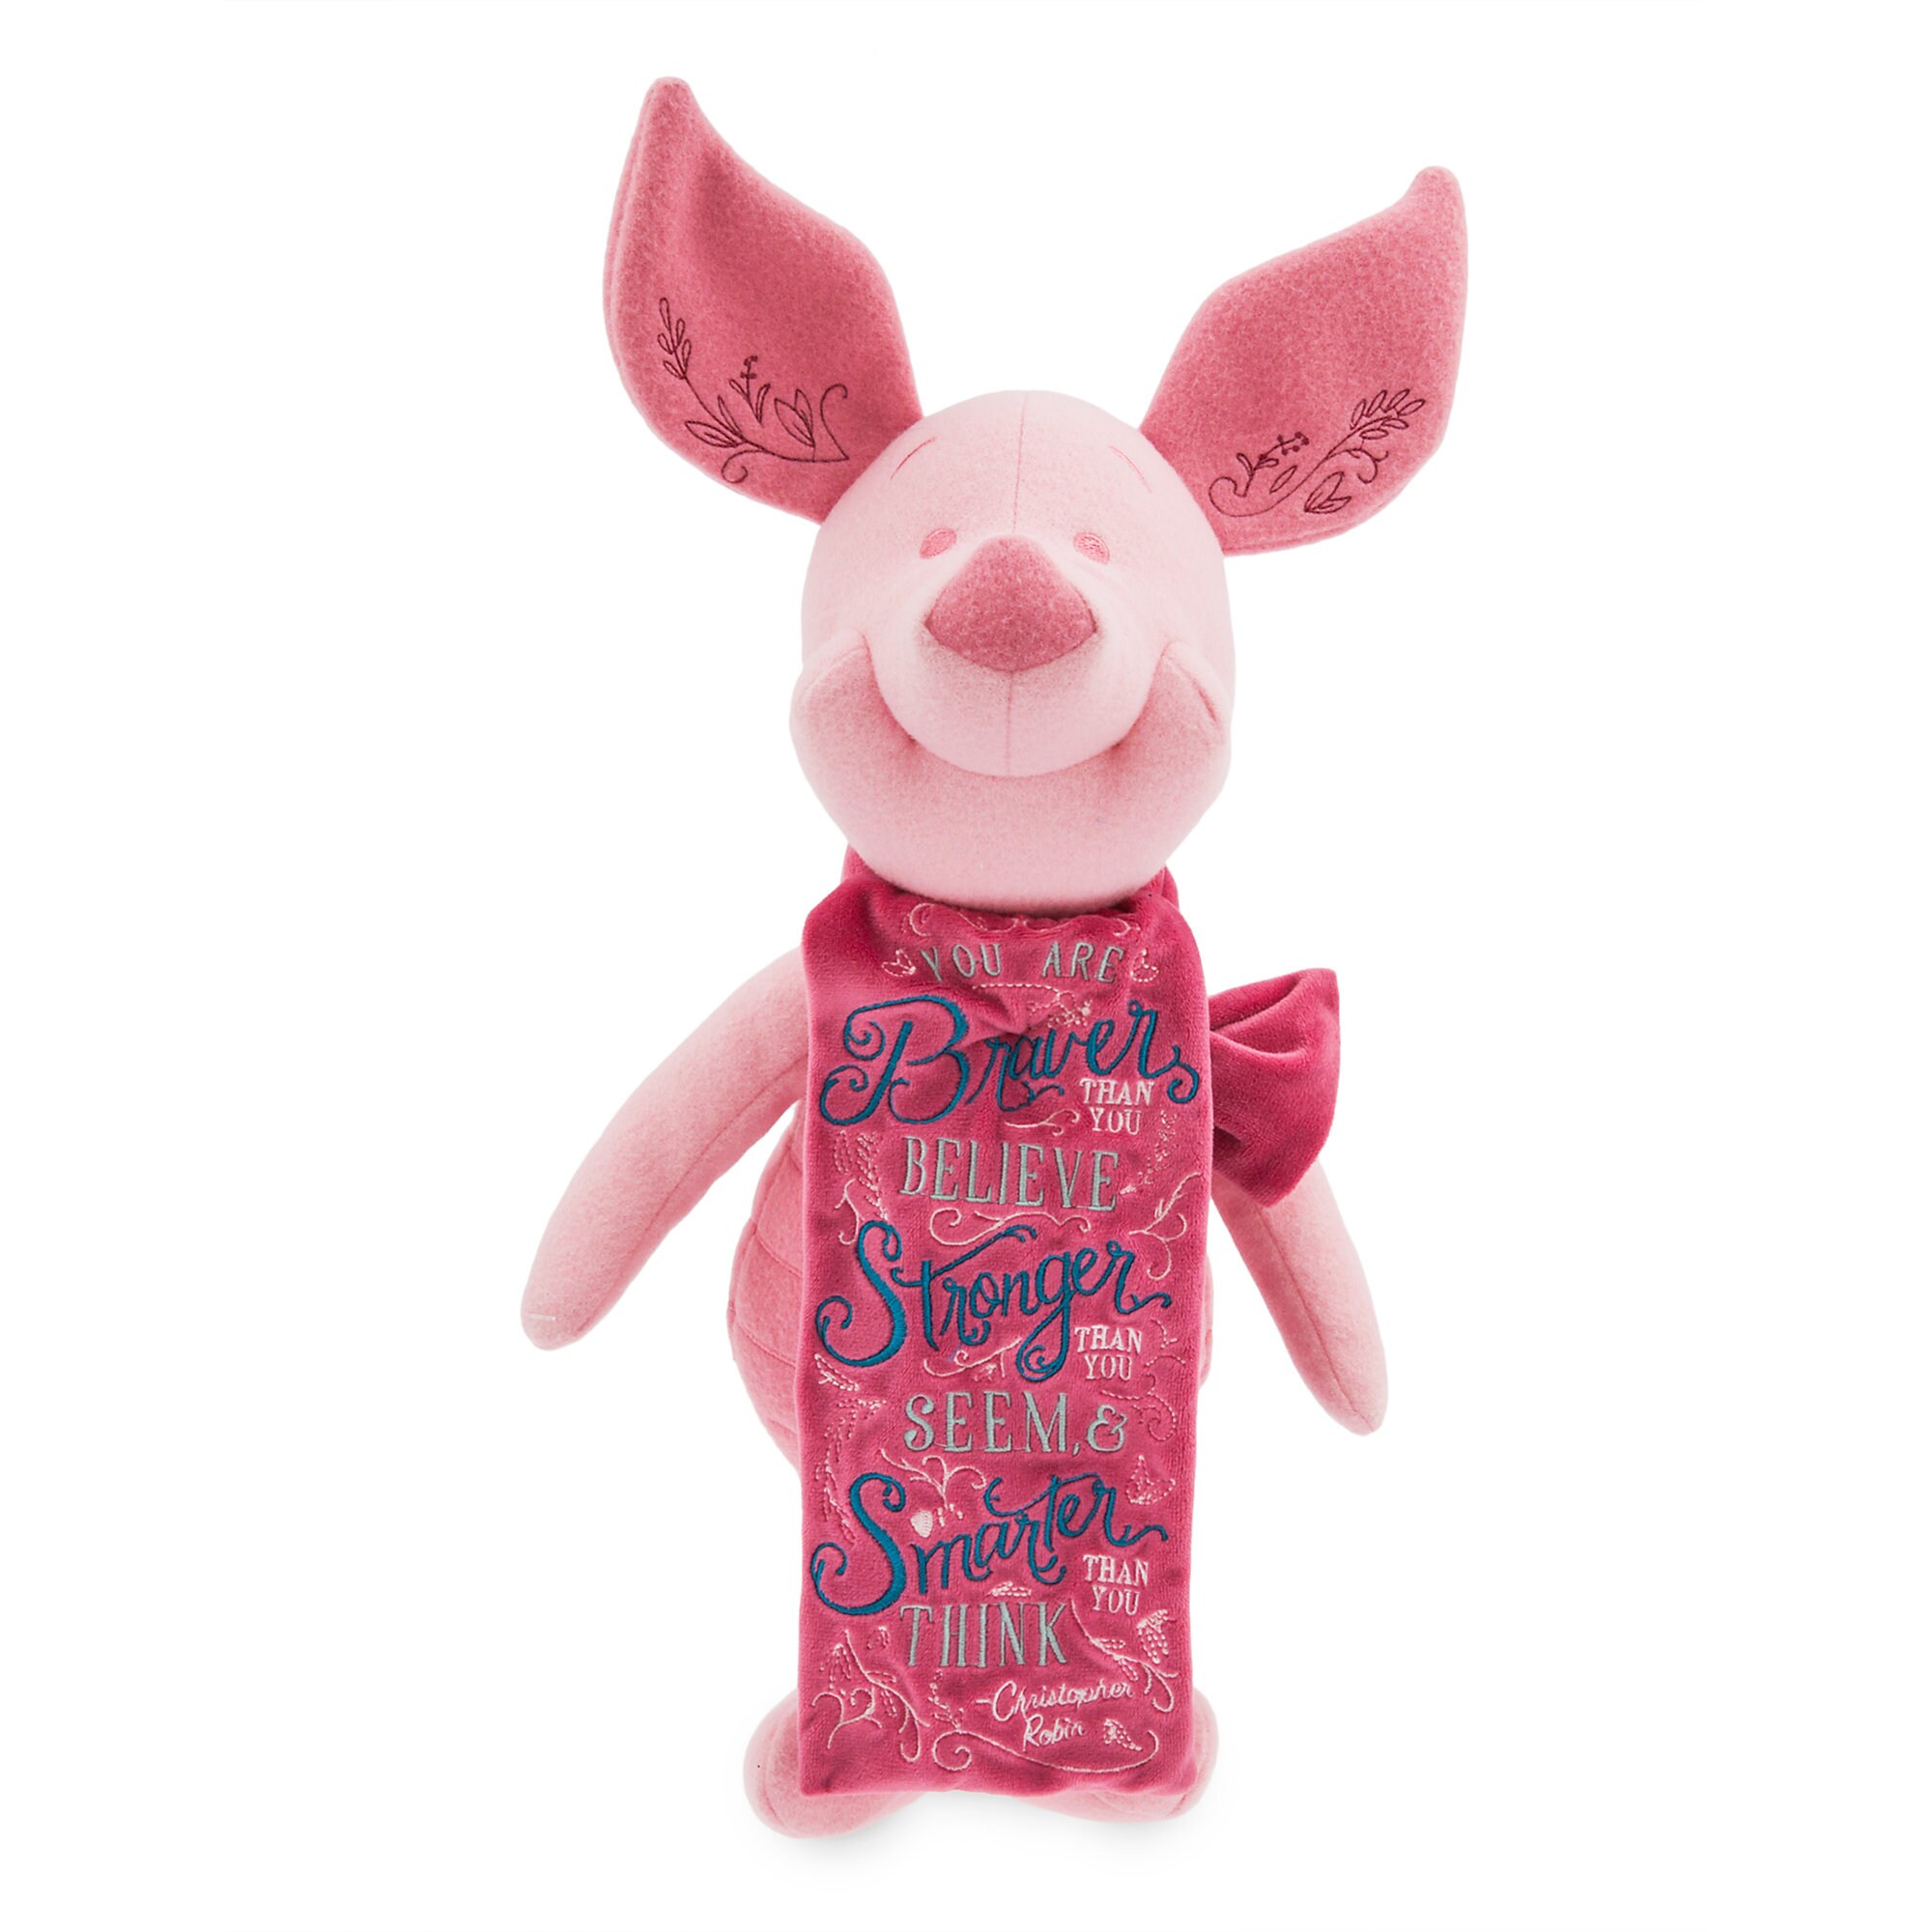 Disney Wisdom Plush - Piglet - Winnie the Pooh - April - Limited Release